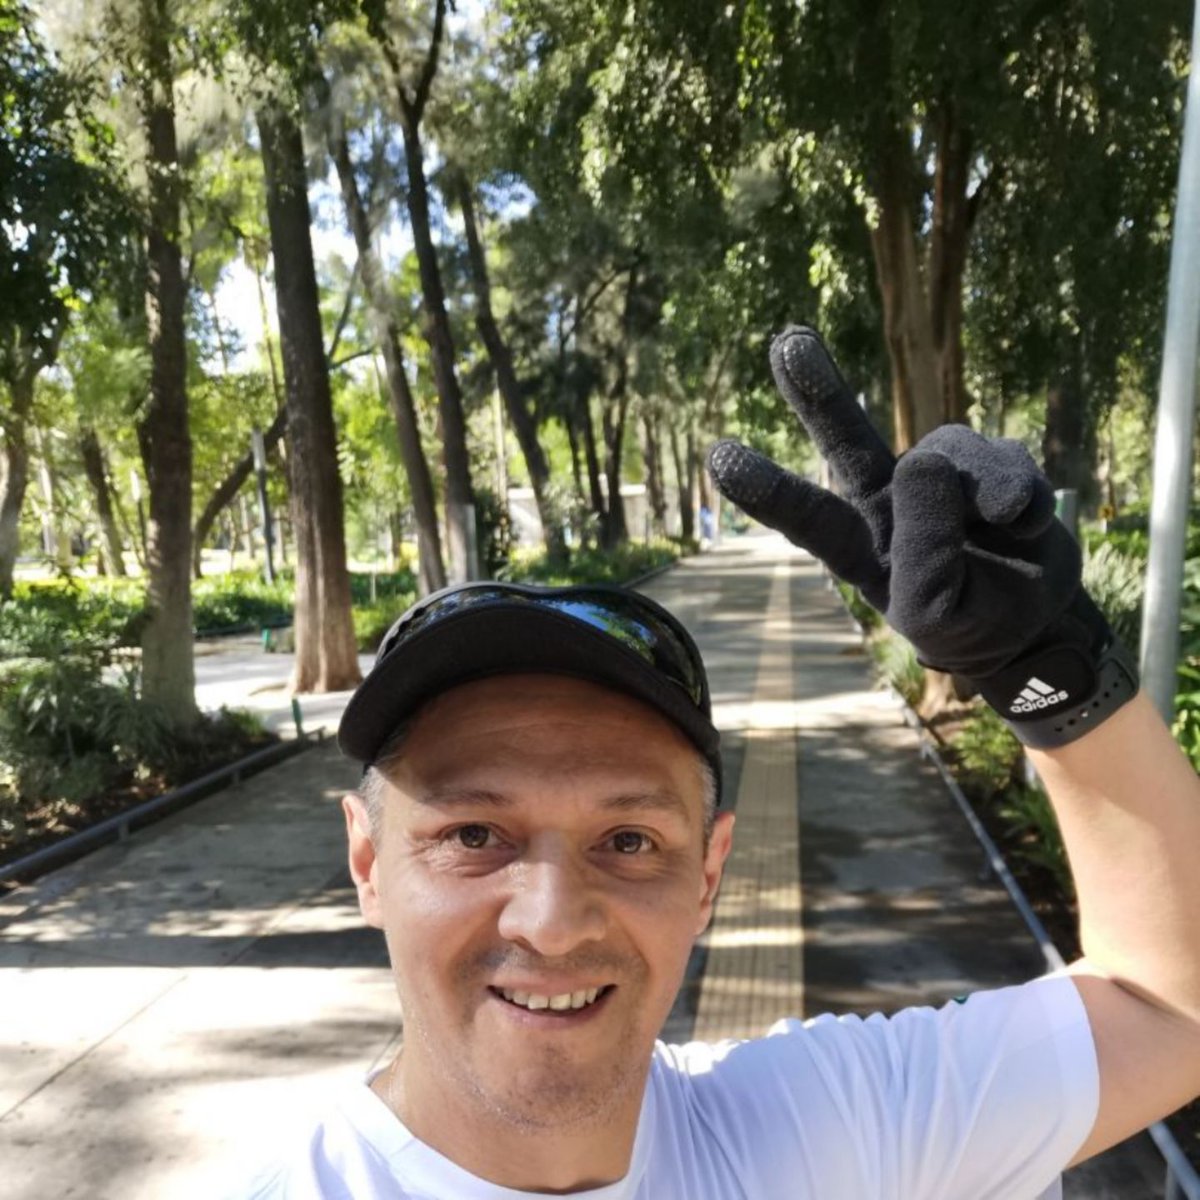 Parque Irekua Irapuato Guanajuato

#nike #nikerunning #maraton #marathon #MaratonCDMXTelcel #correr #running #corredores #adidas #bluerunners365